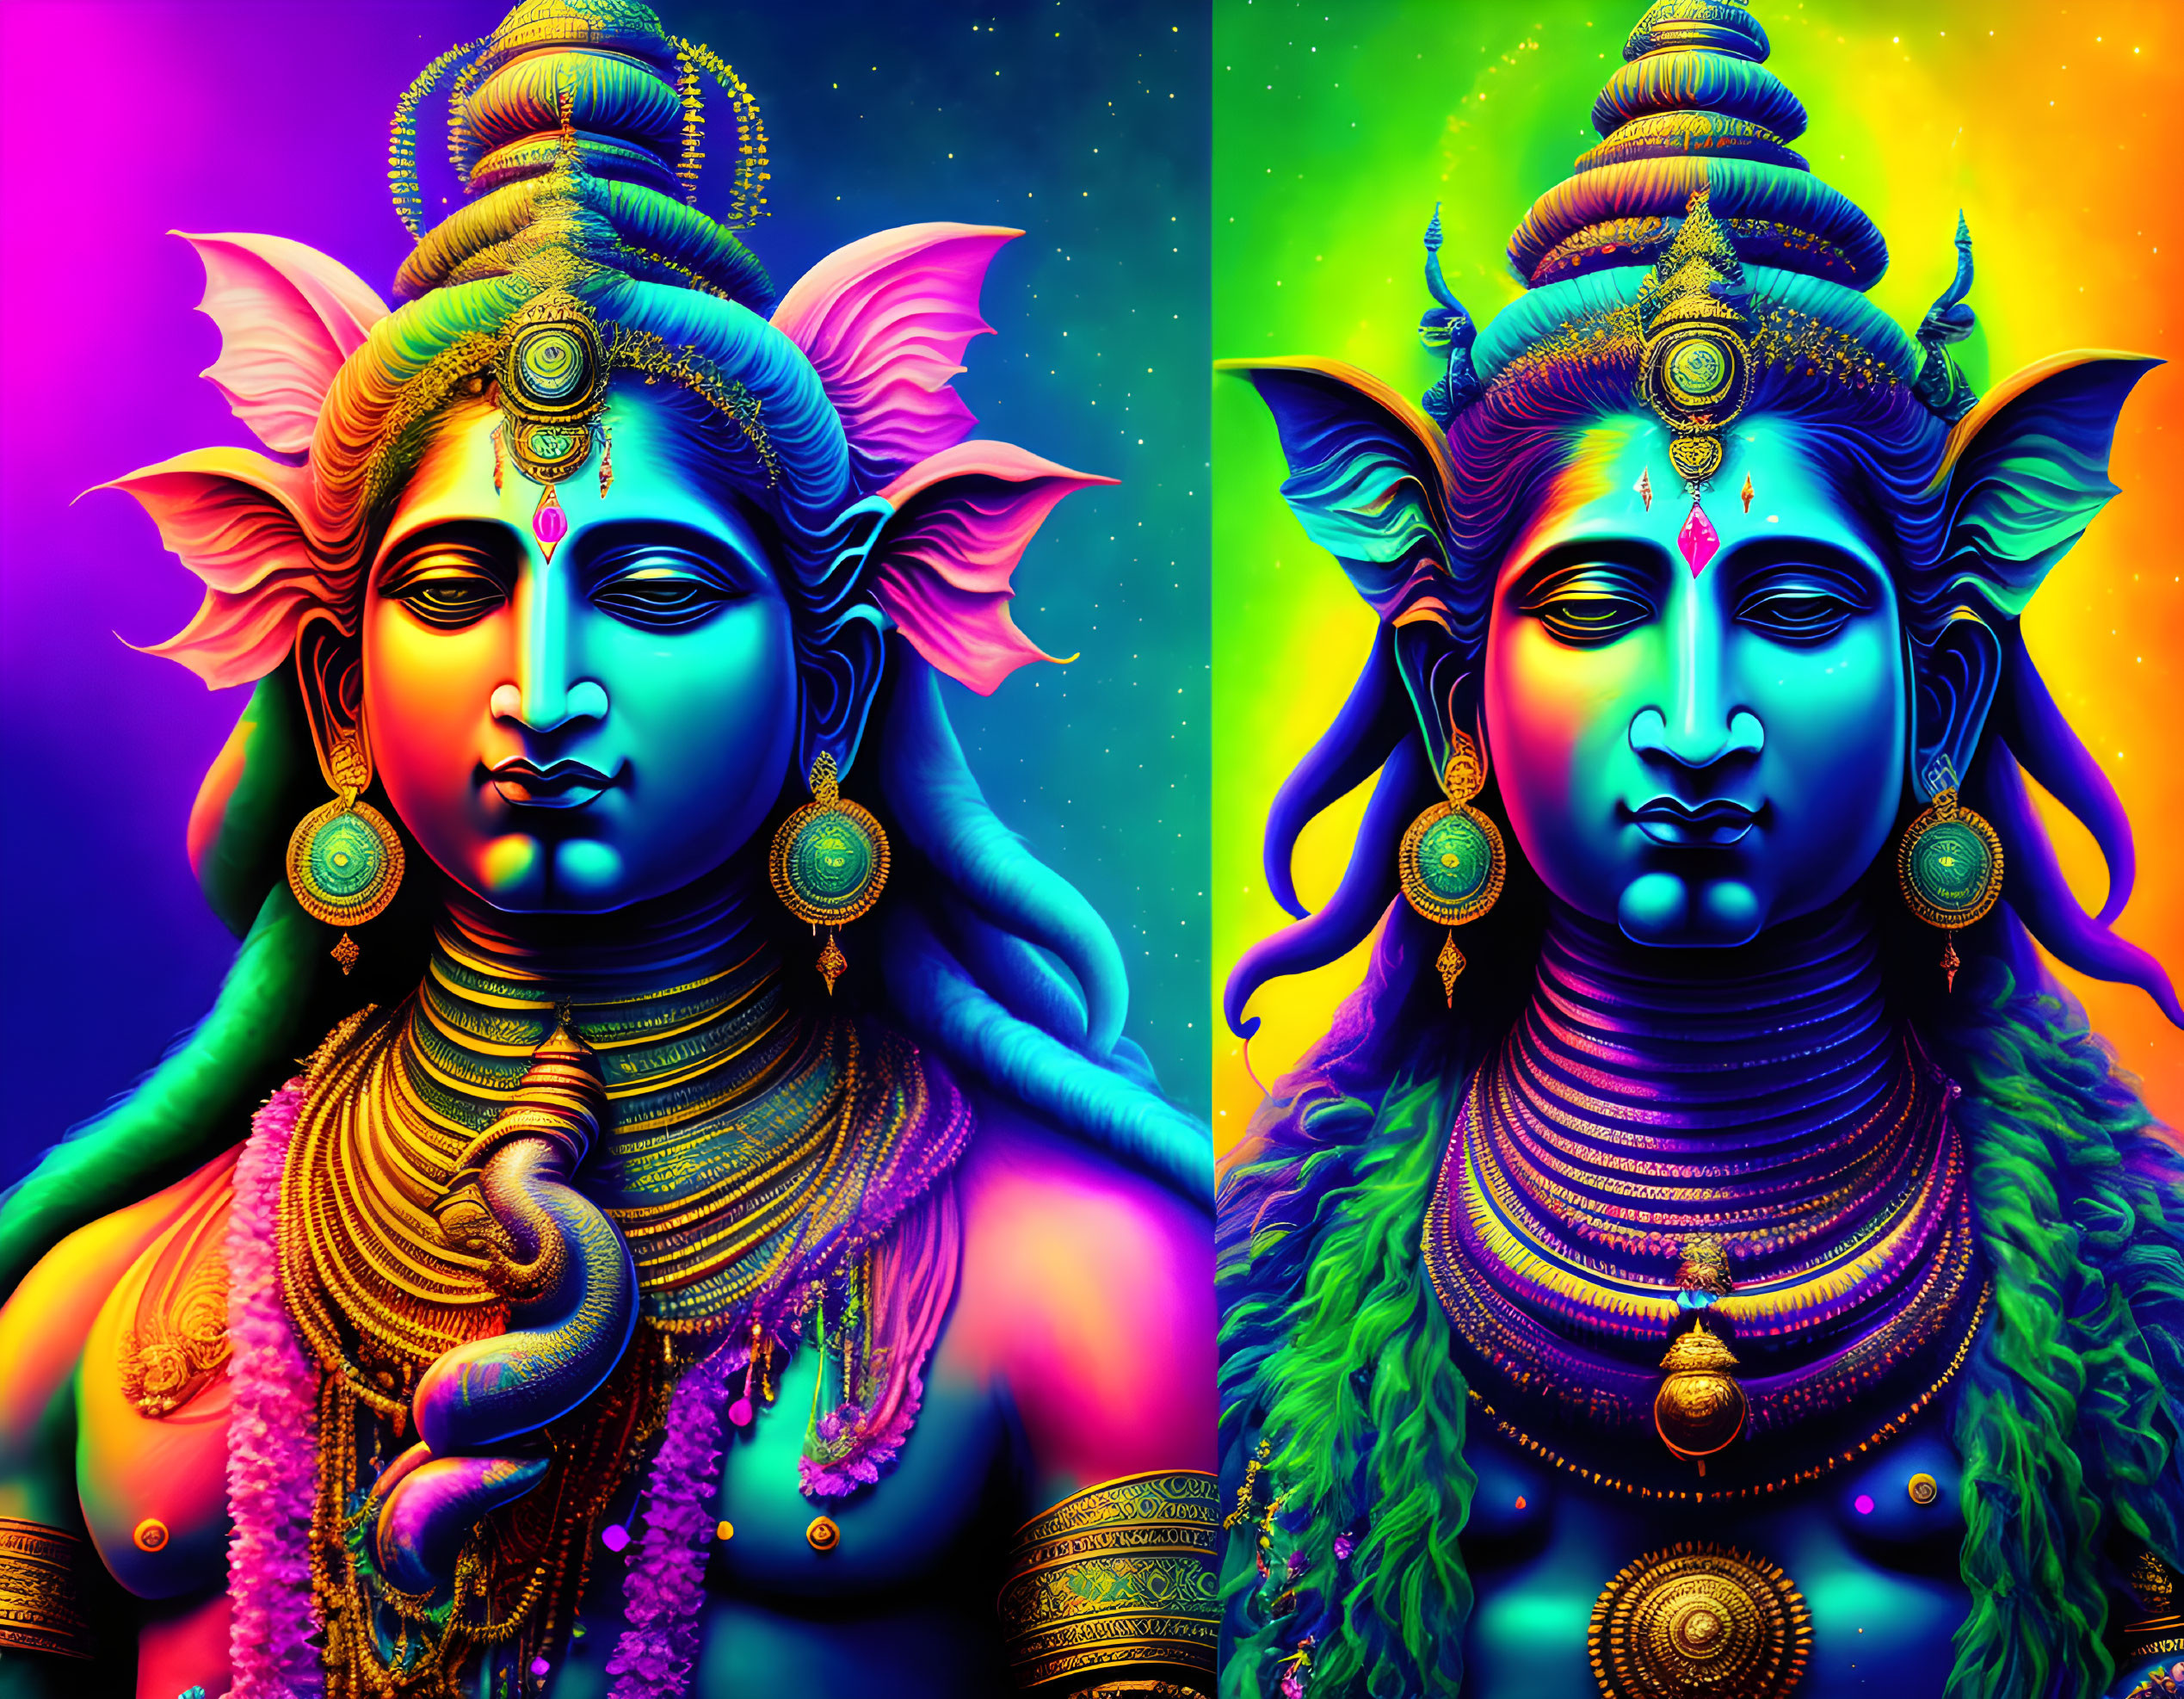 Lord Shiva and Lord Ganesha hybrid